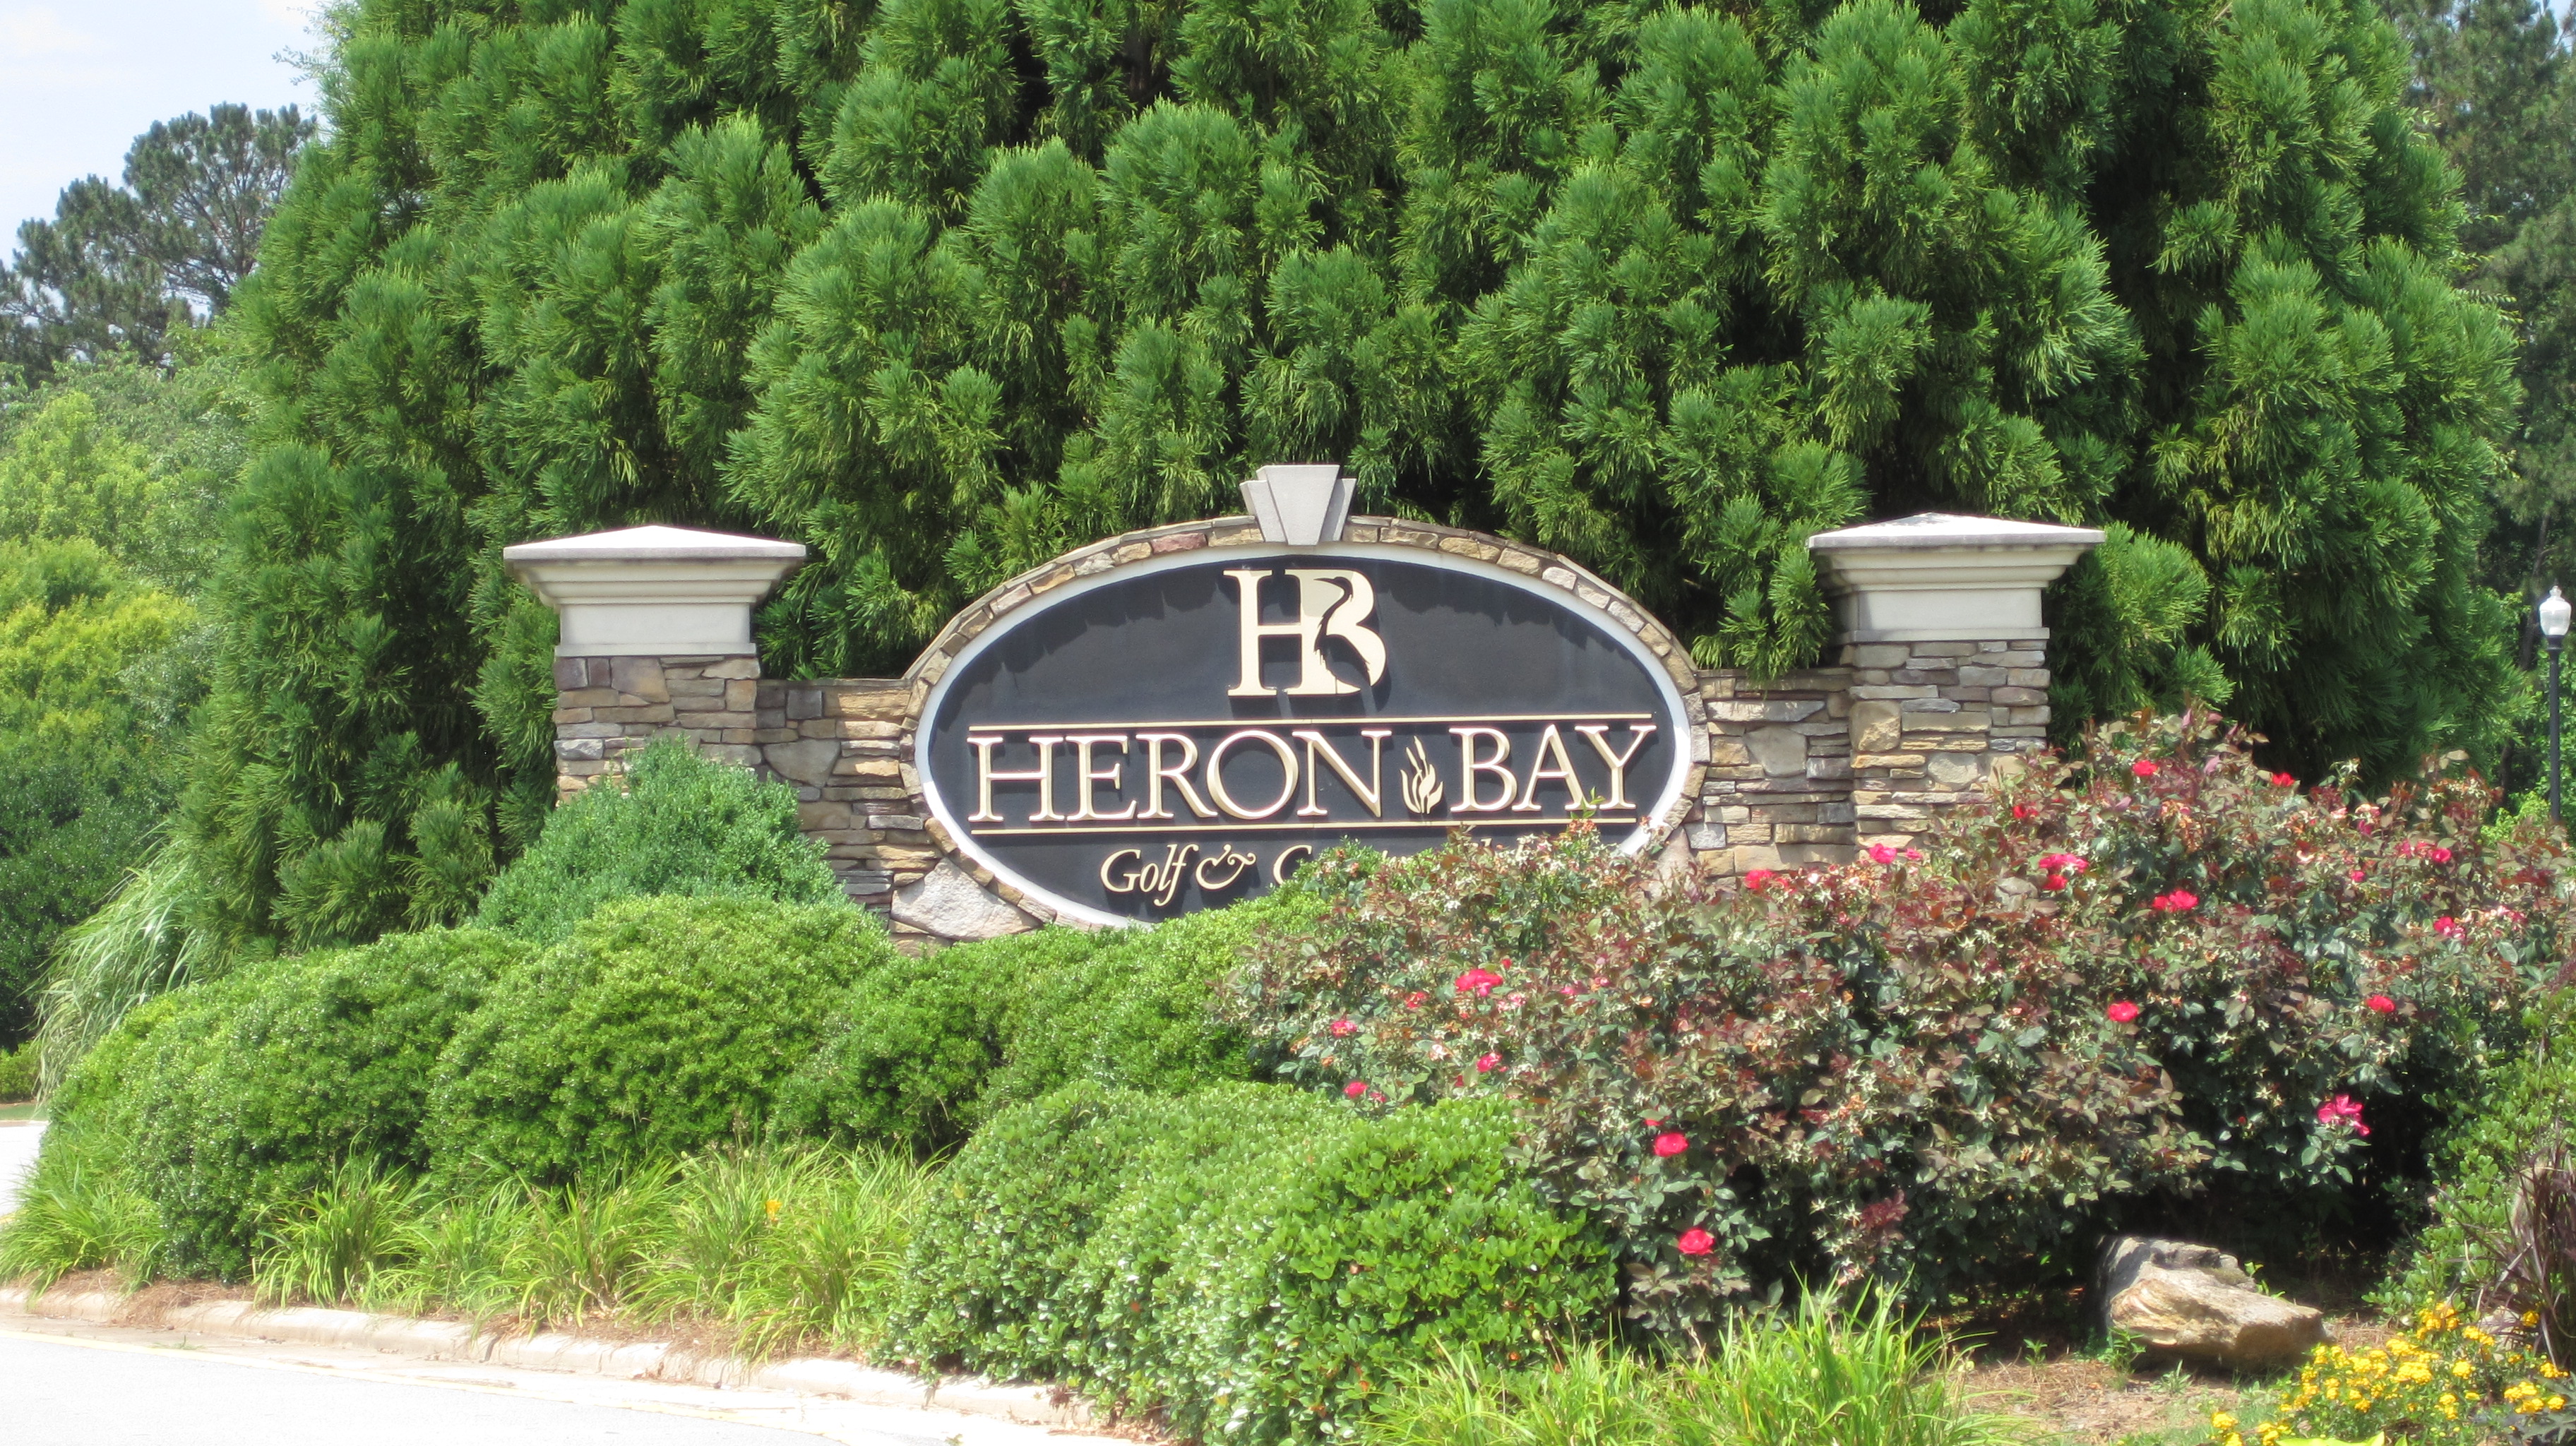 Heron Bay Golf & Country Club